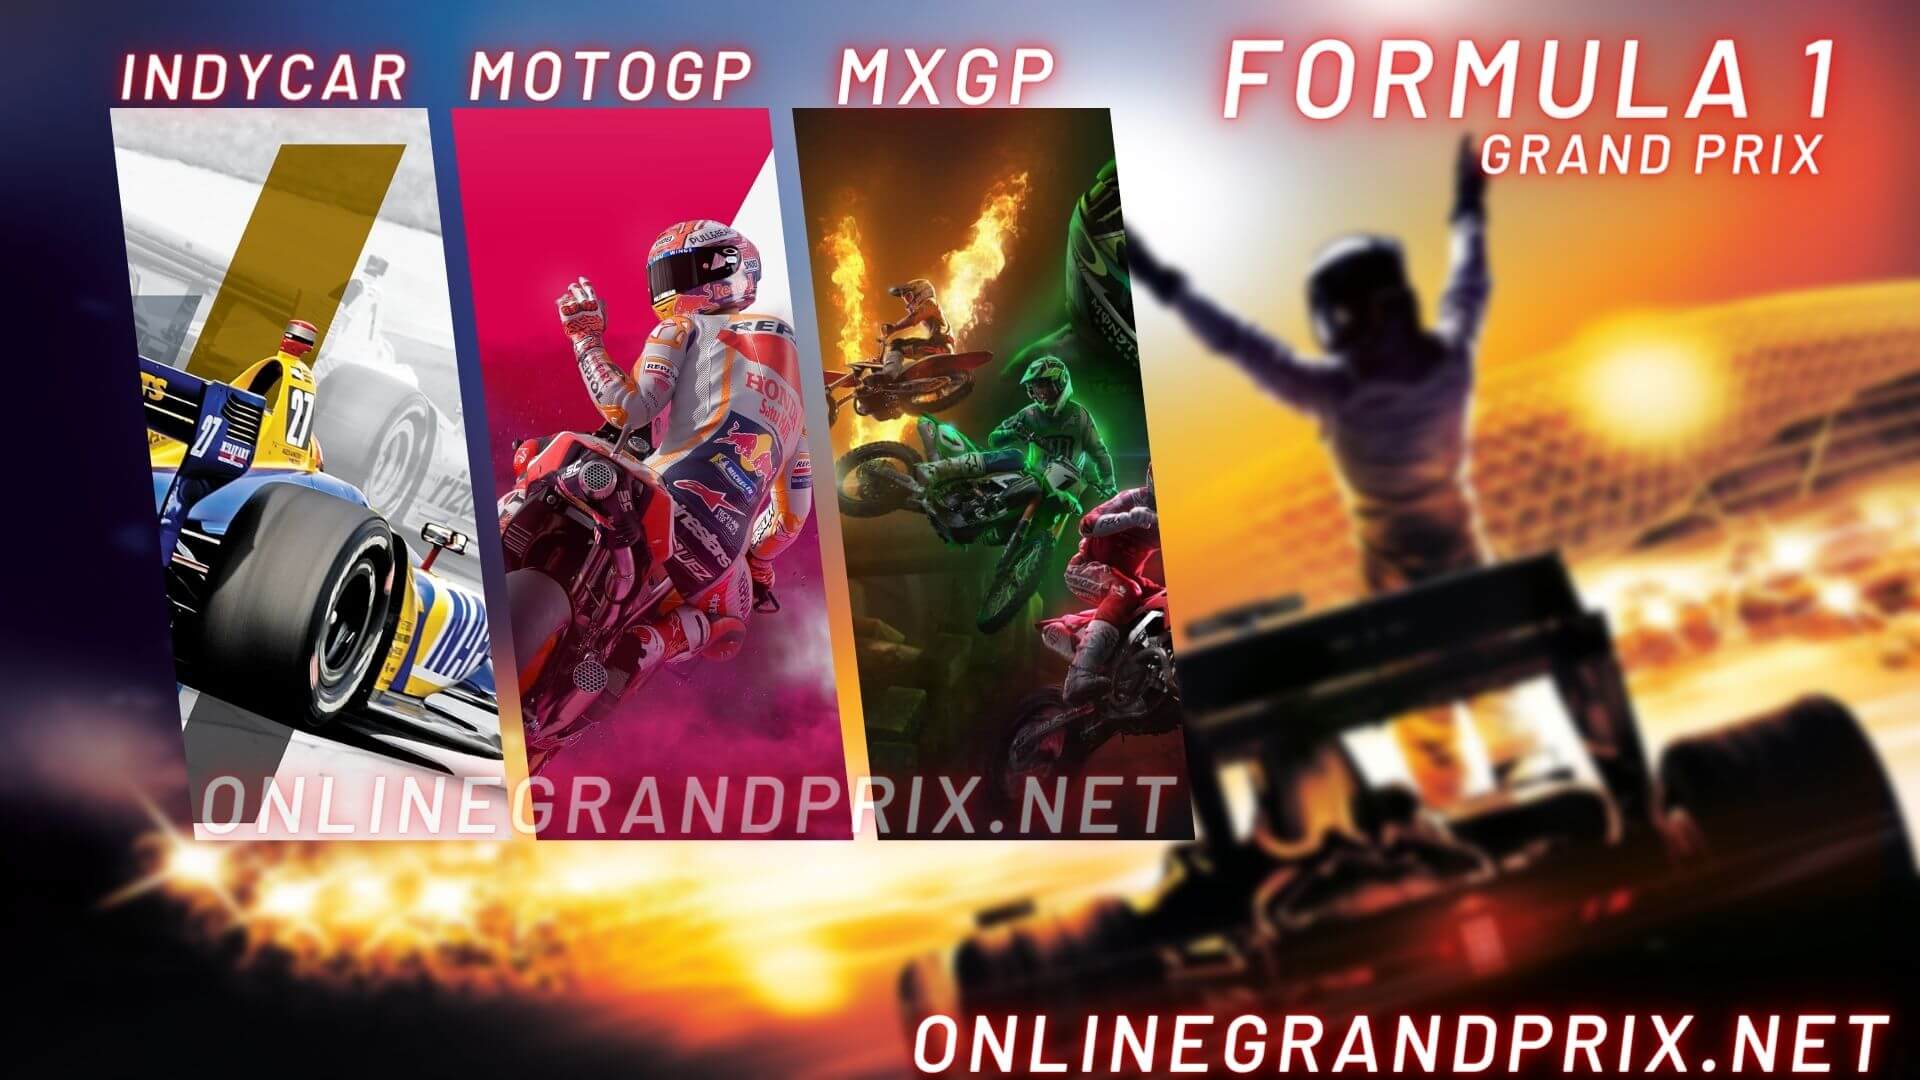 live-qatar-grand-prix-motorcycle-race-online